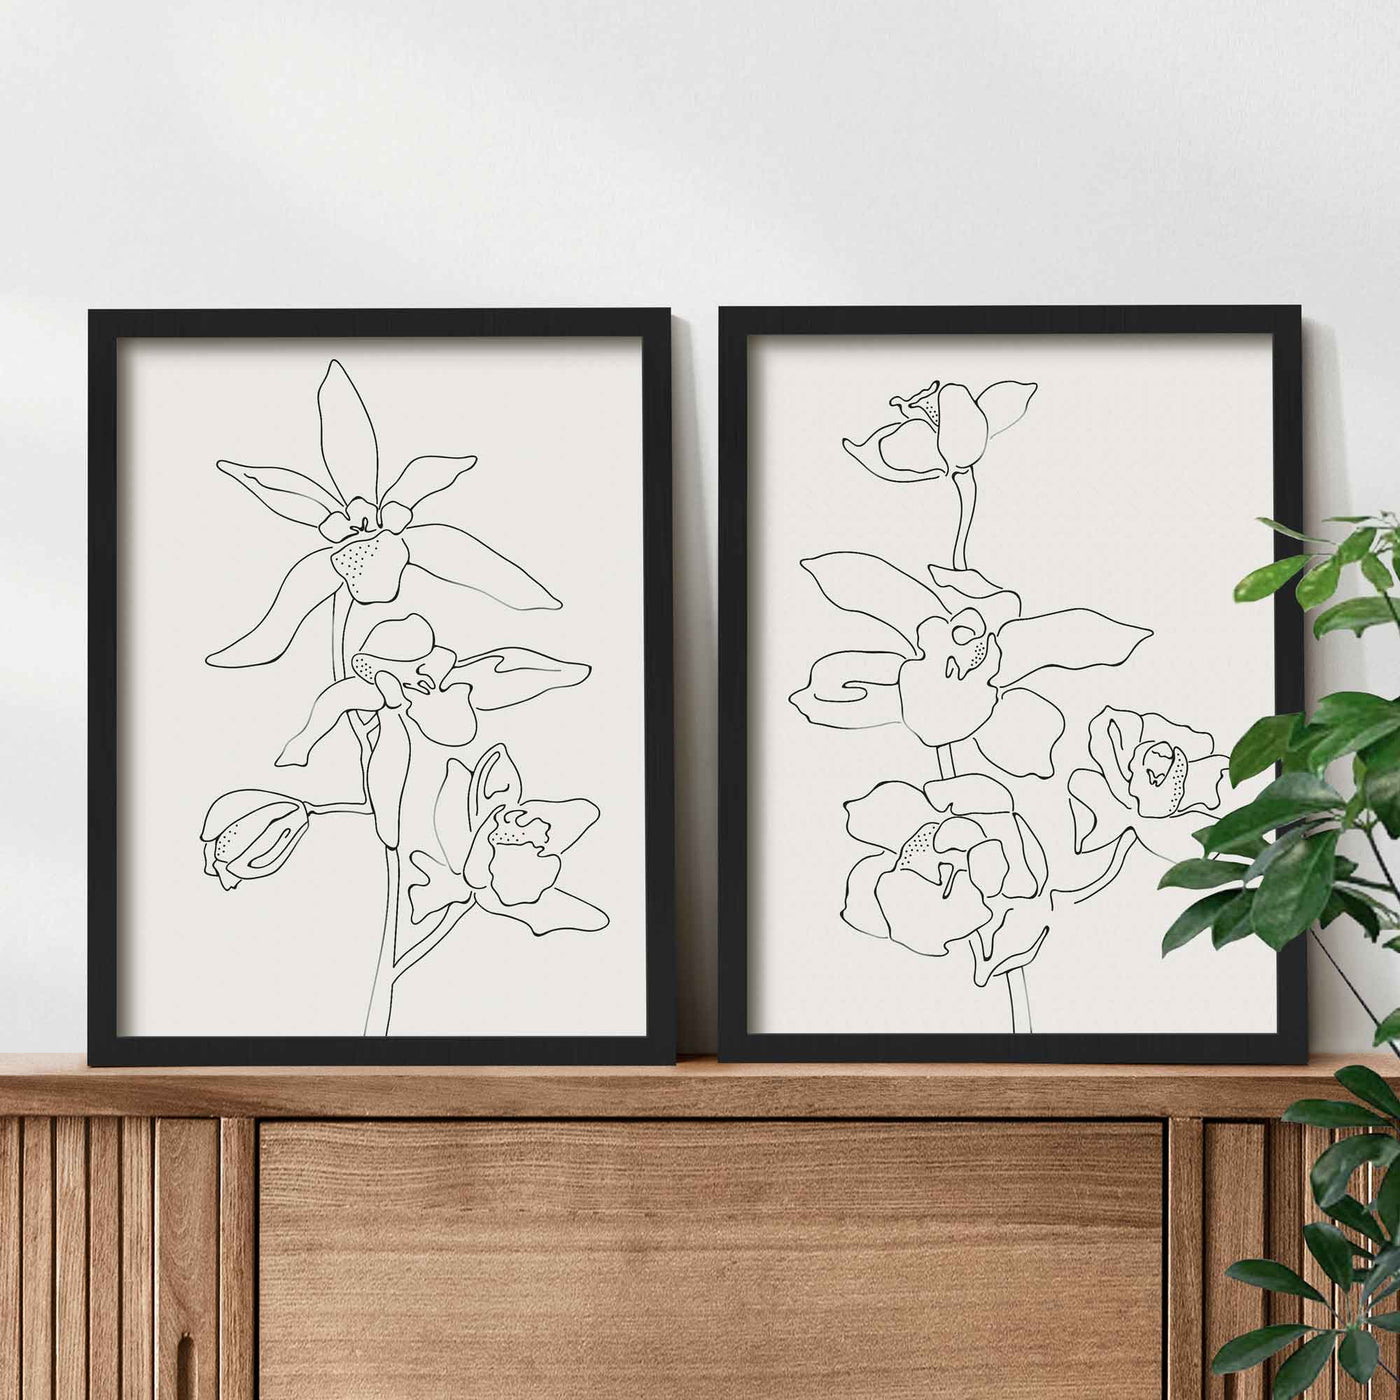 Green Lili 30x40cm (12x16") / Black Frame Orchid Flowers Wall Art Set